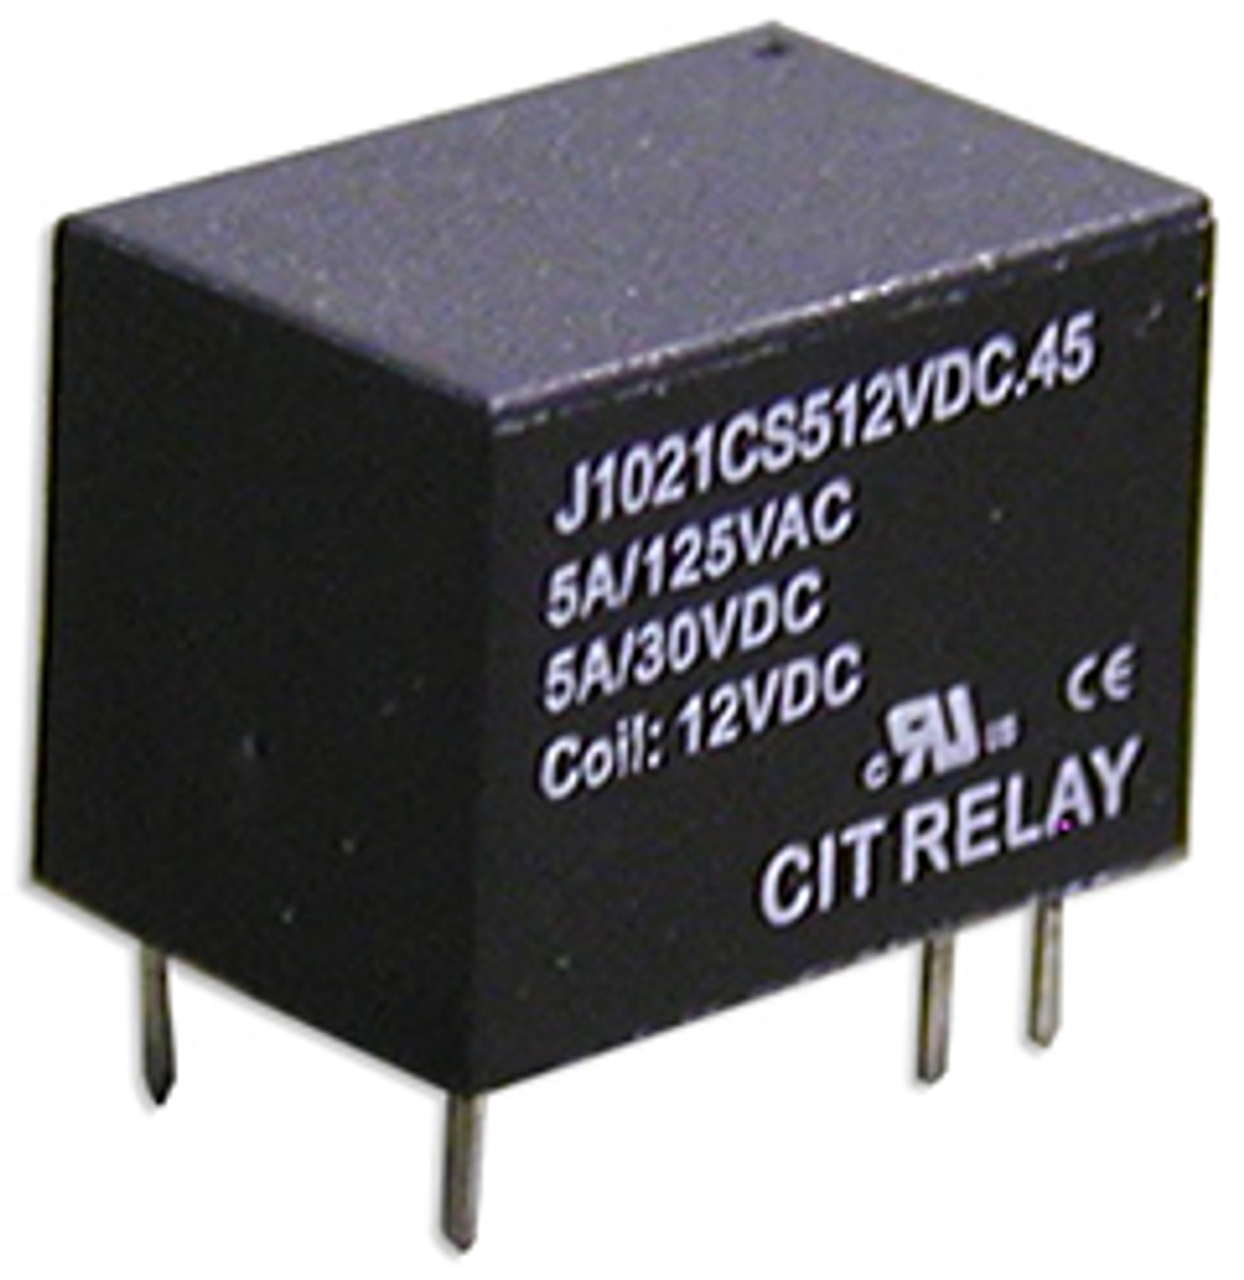 CIT Relay and Switch J1021CS39VDC.36 Power Relays